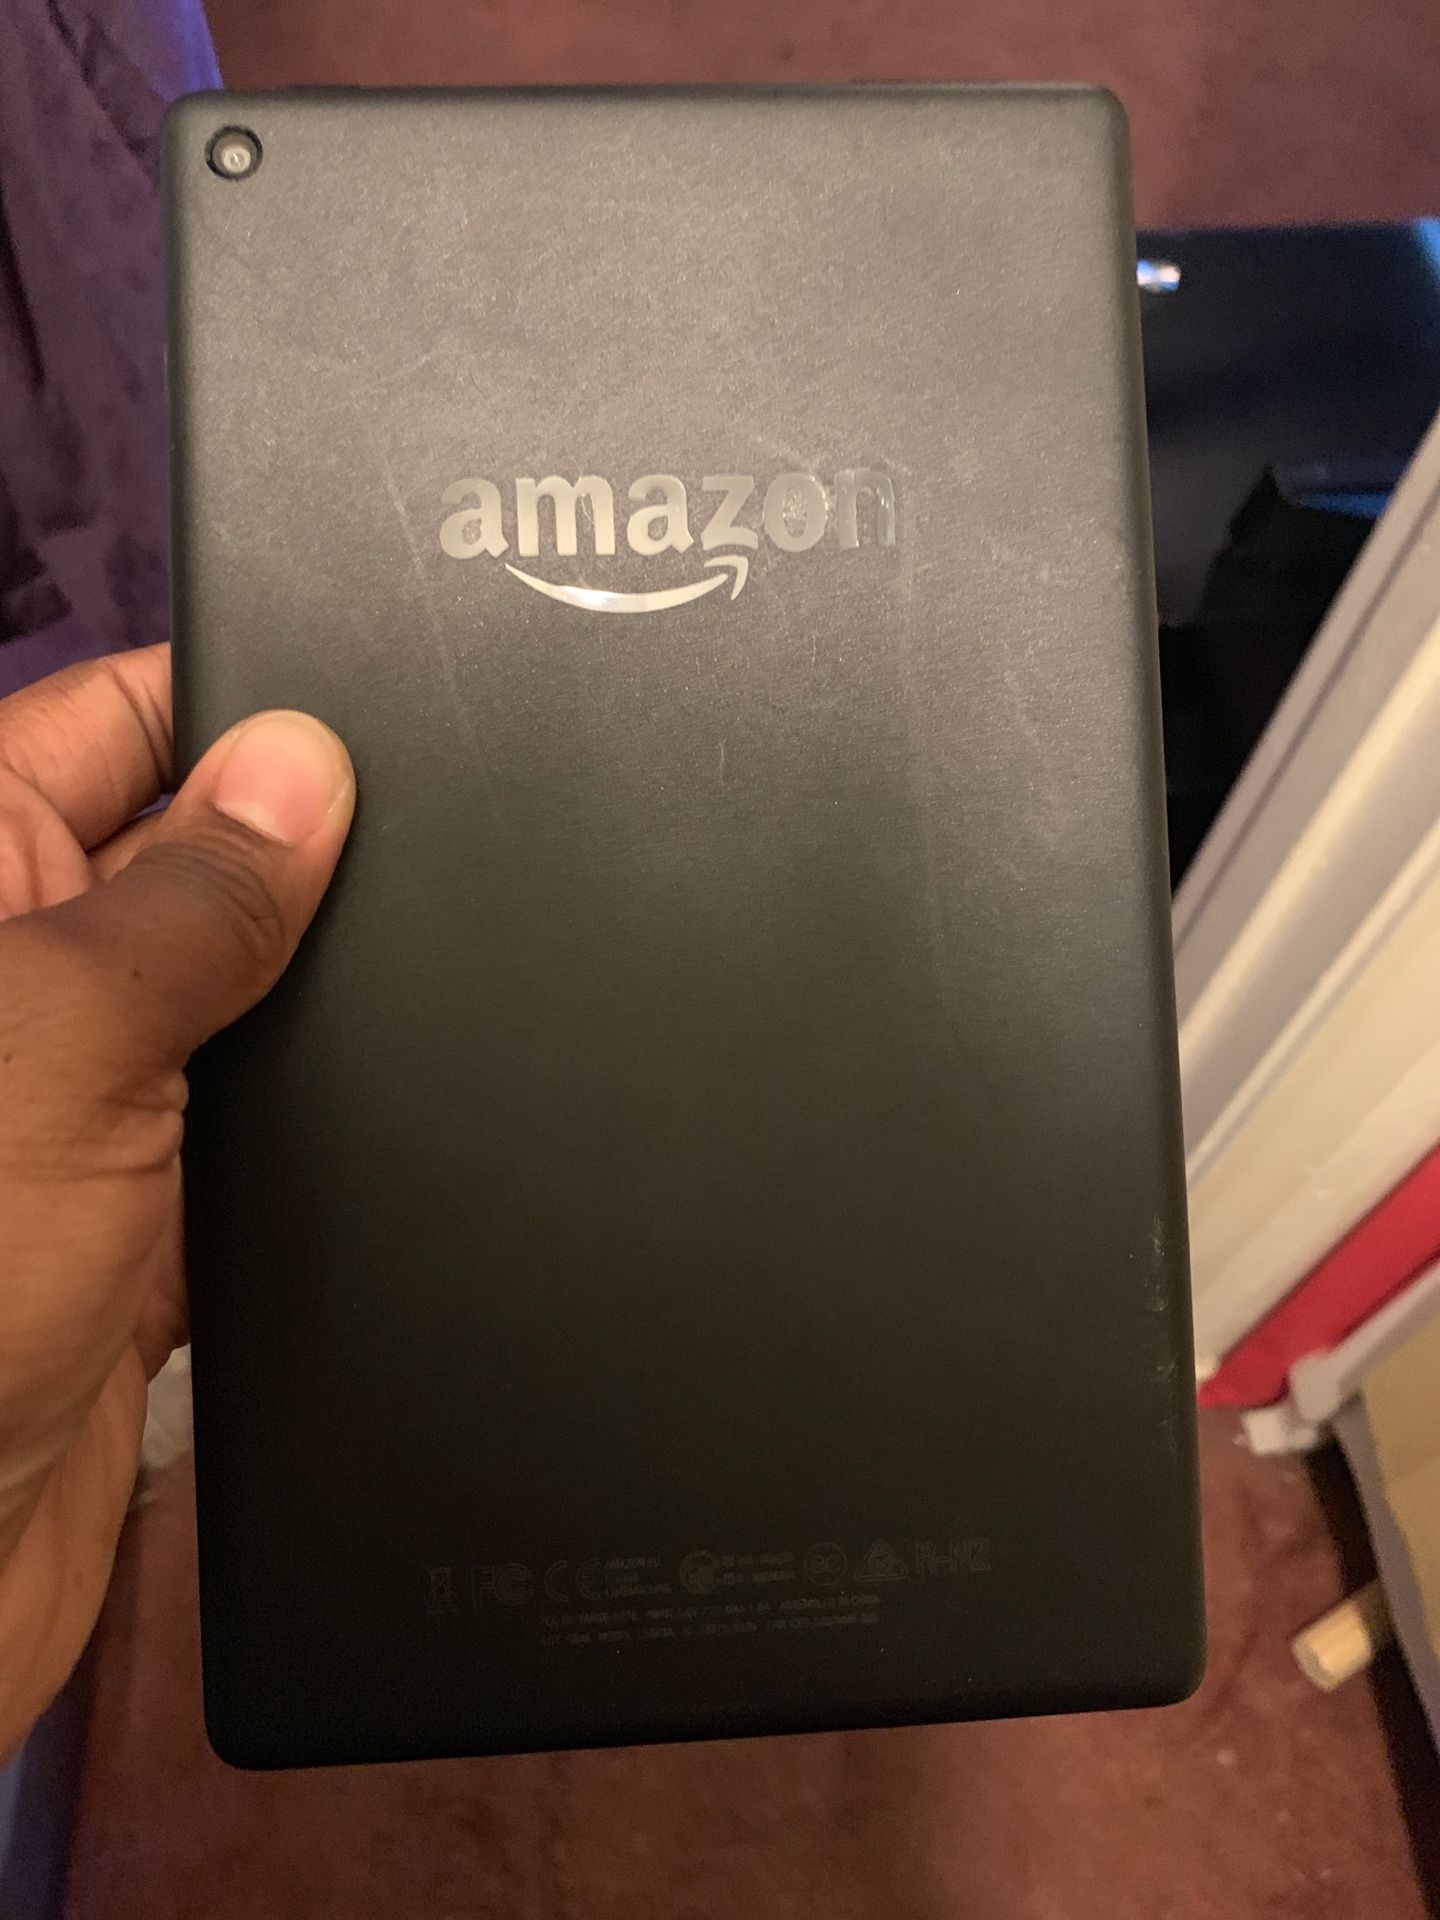 Amazon tablet Fire HD 8